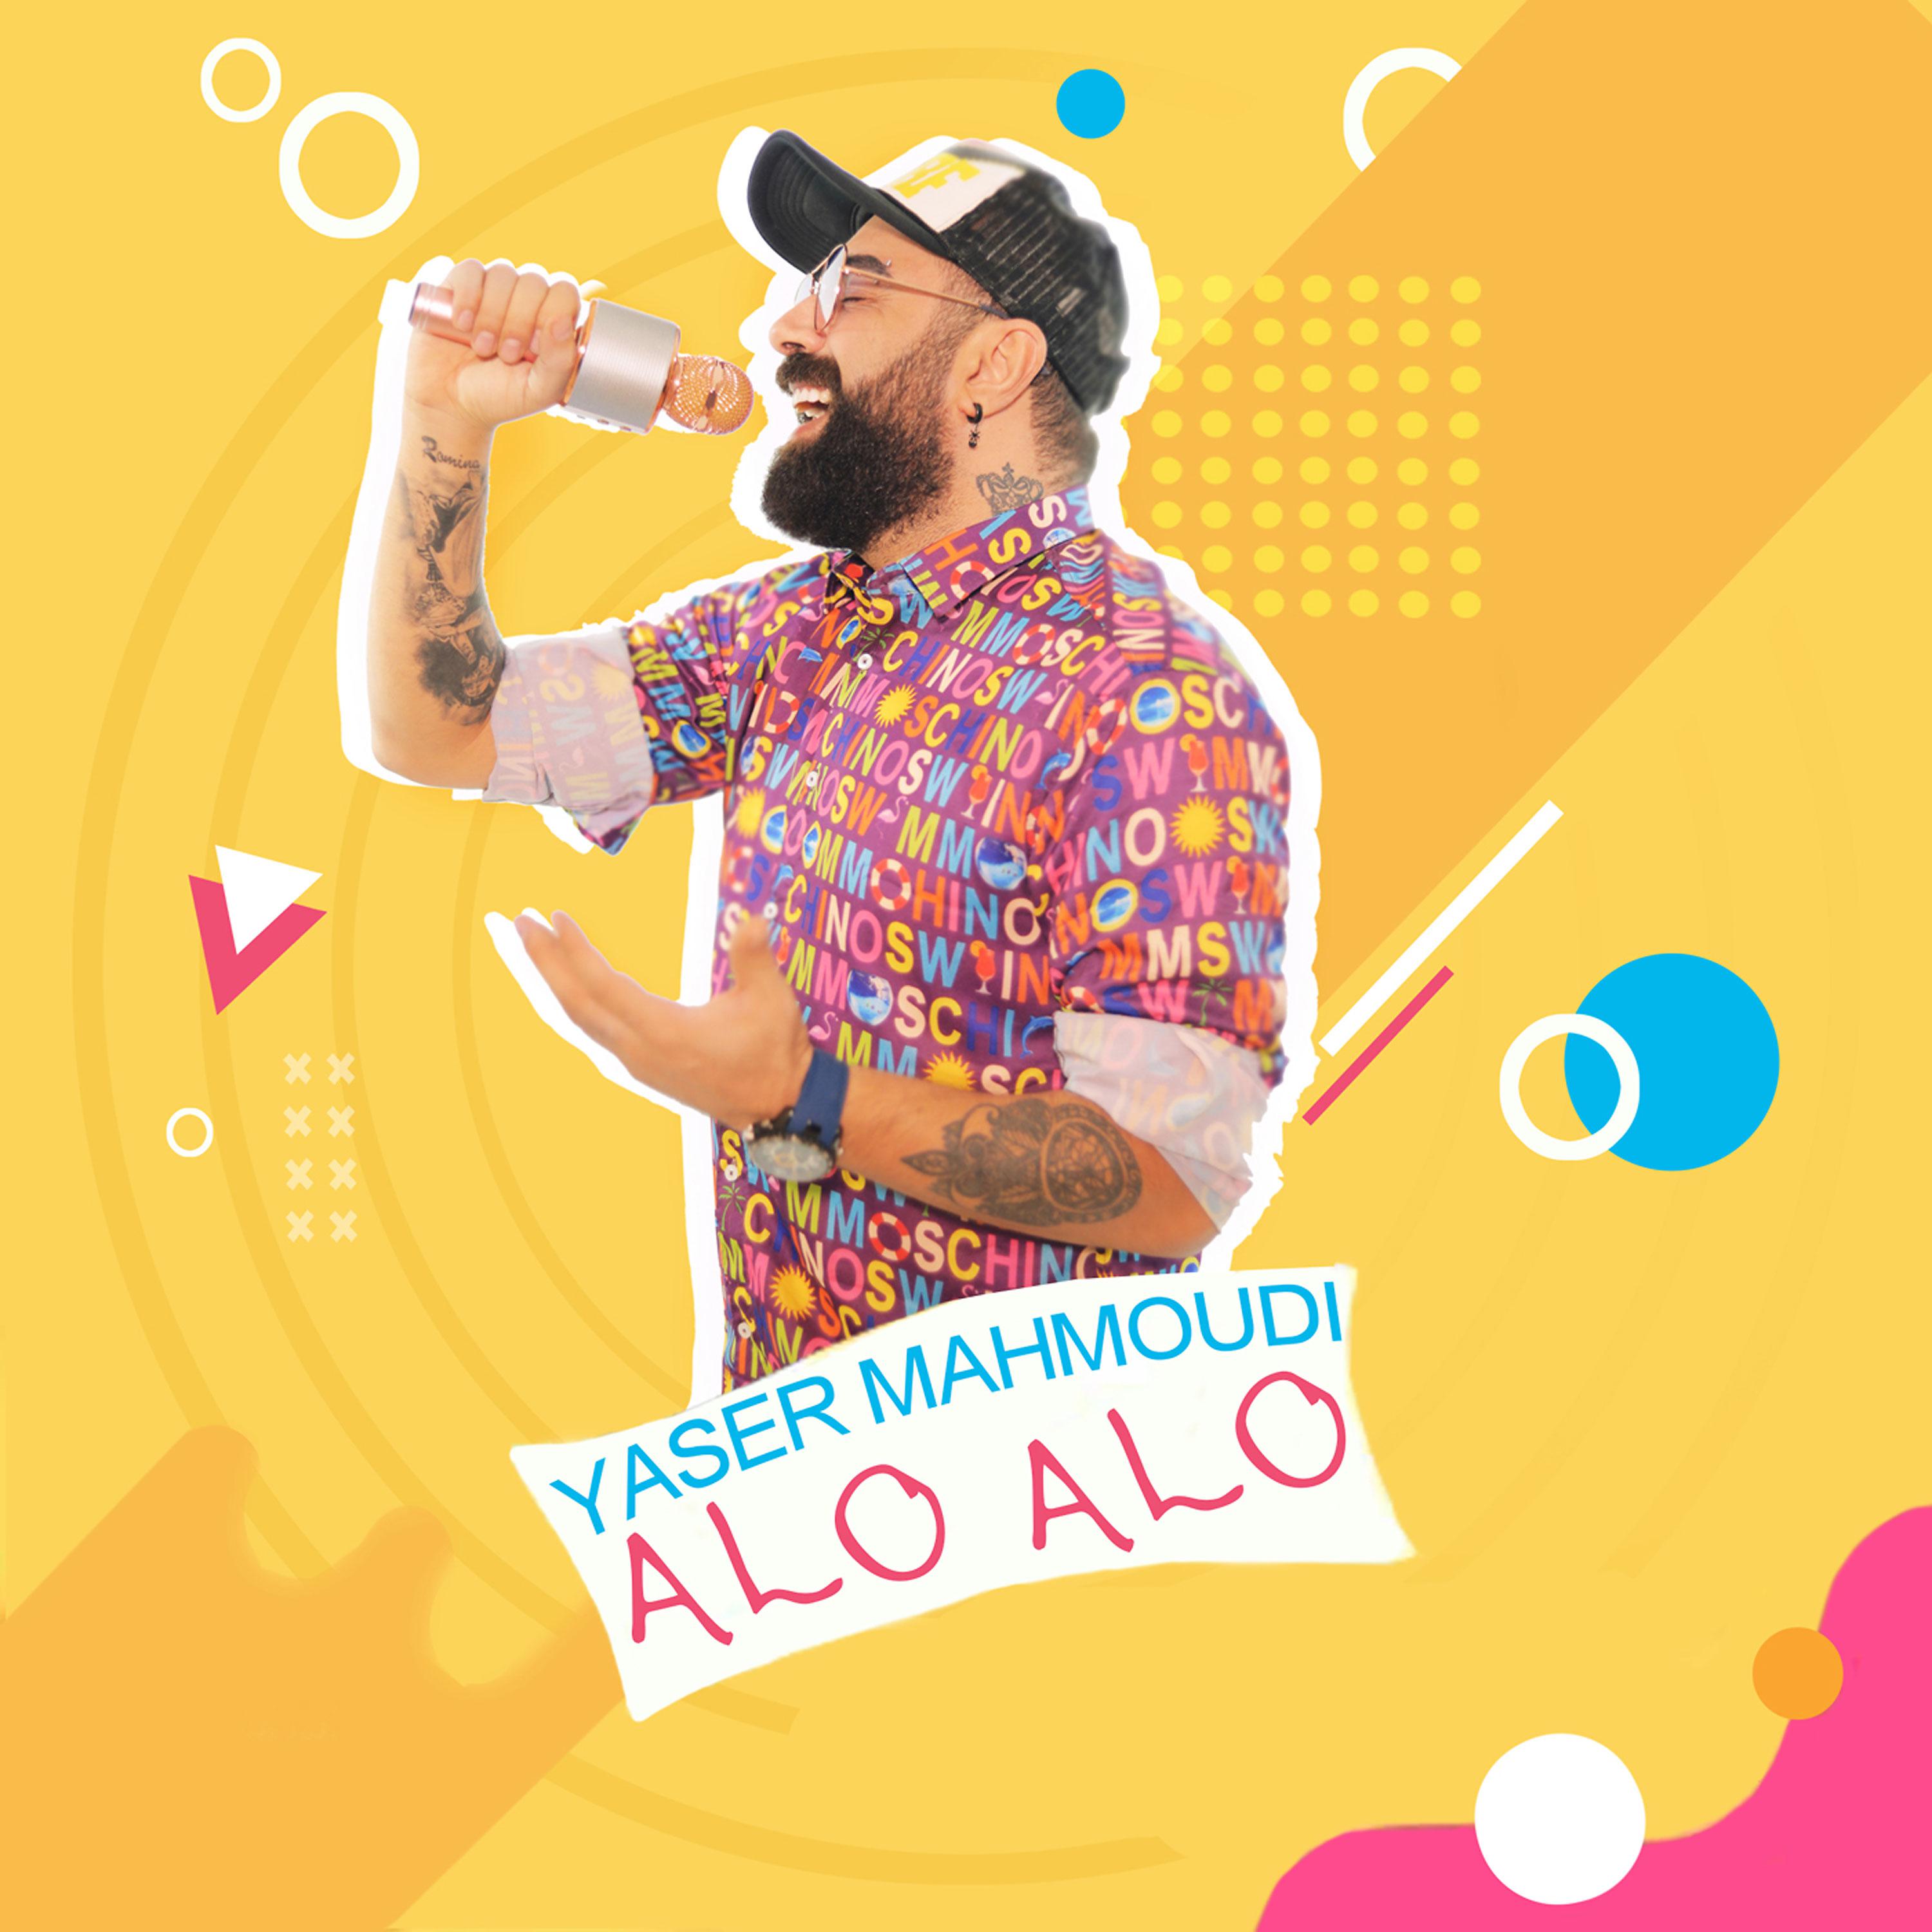 Постер альбома Alo Alo